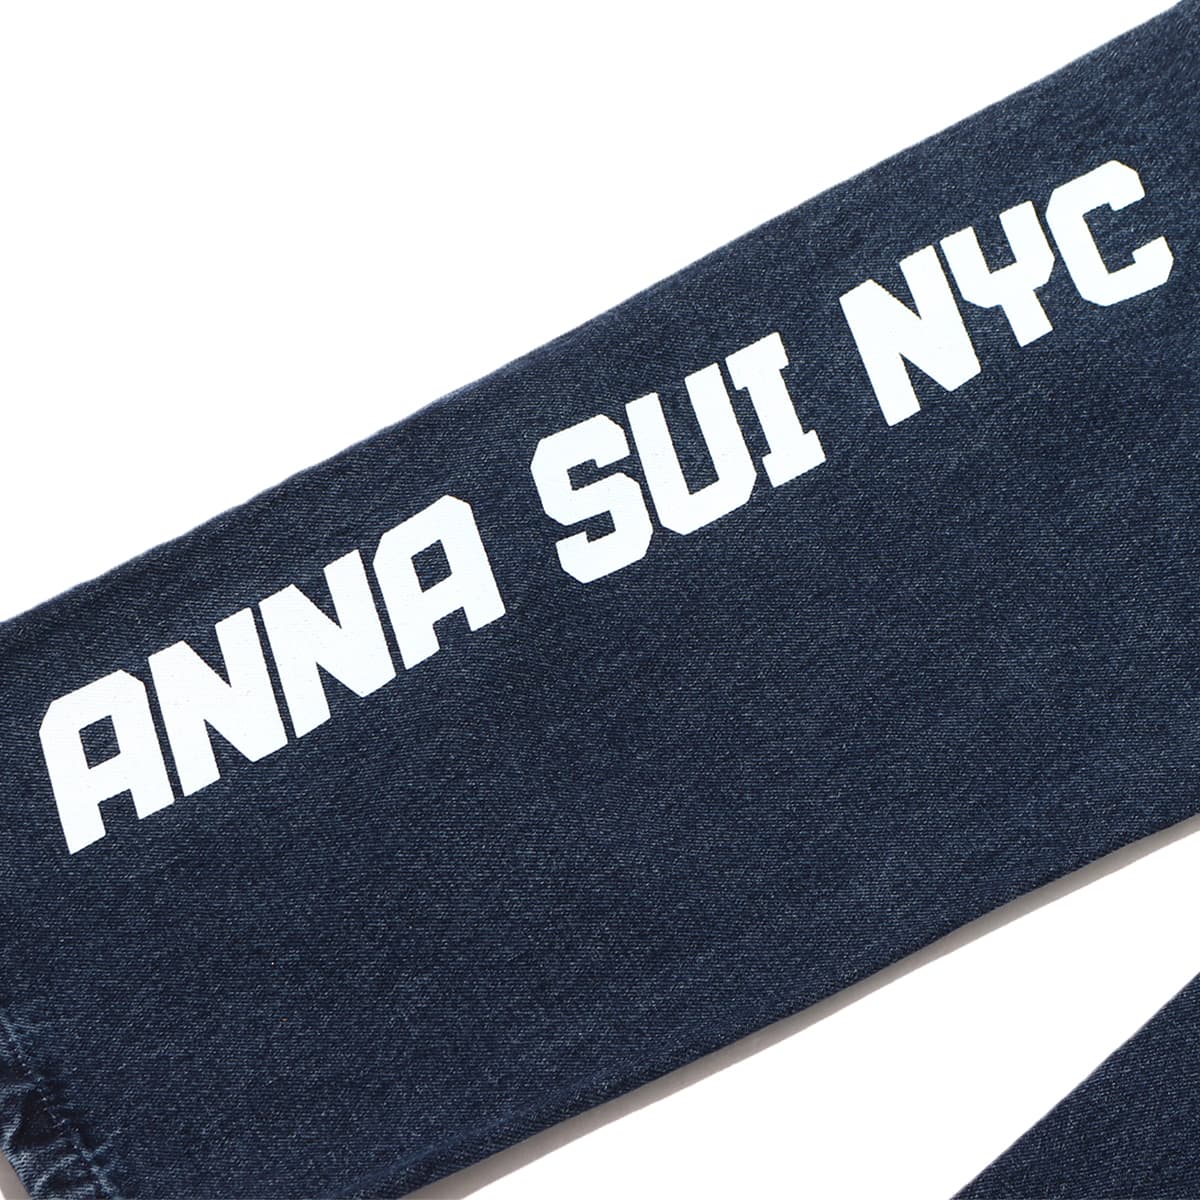 ANNA SUI NYC サイドロゴ デニムパンツ INDIGO 22FA-I